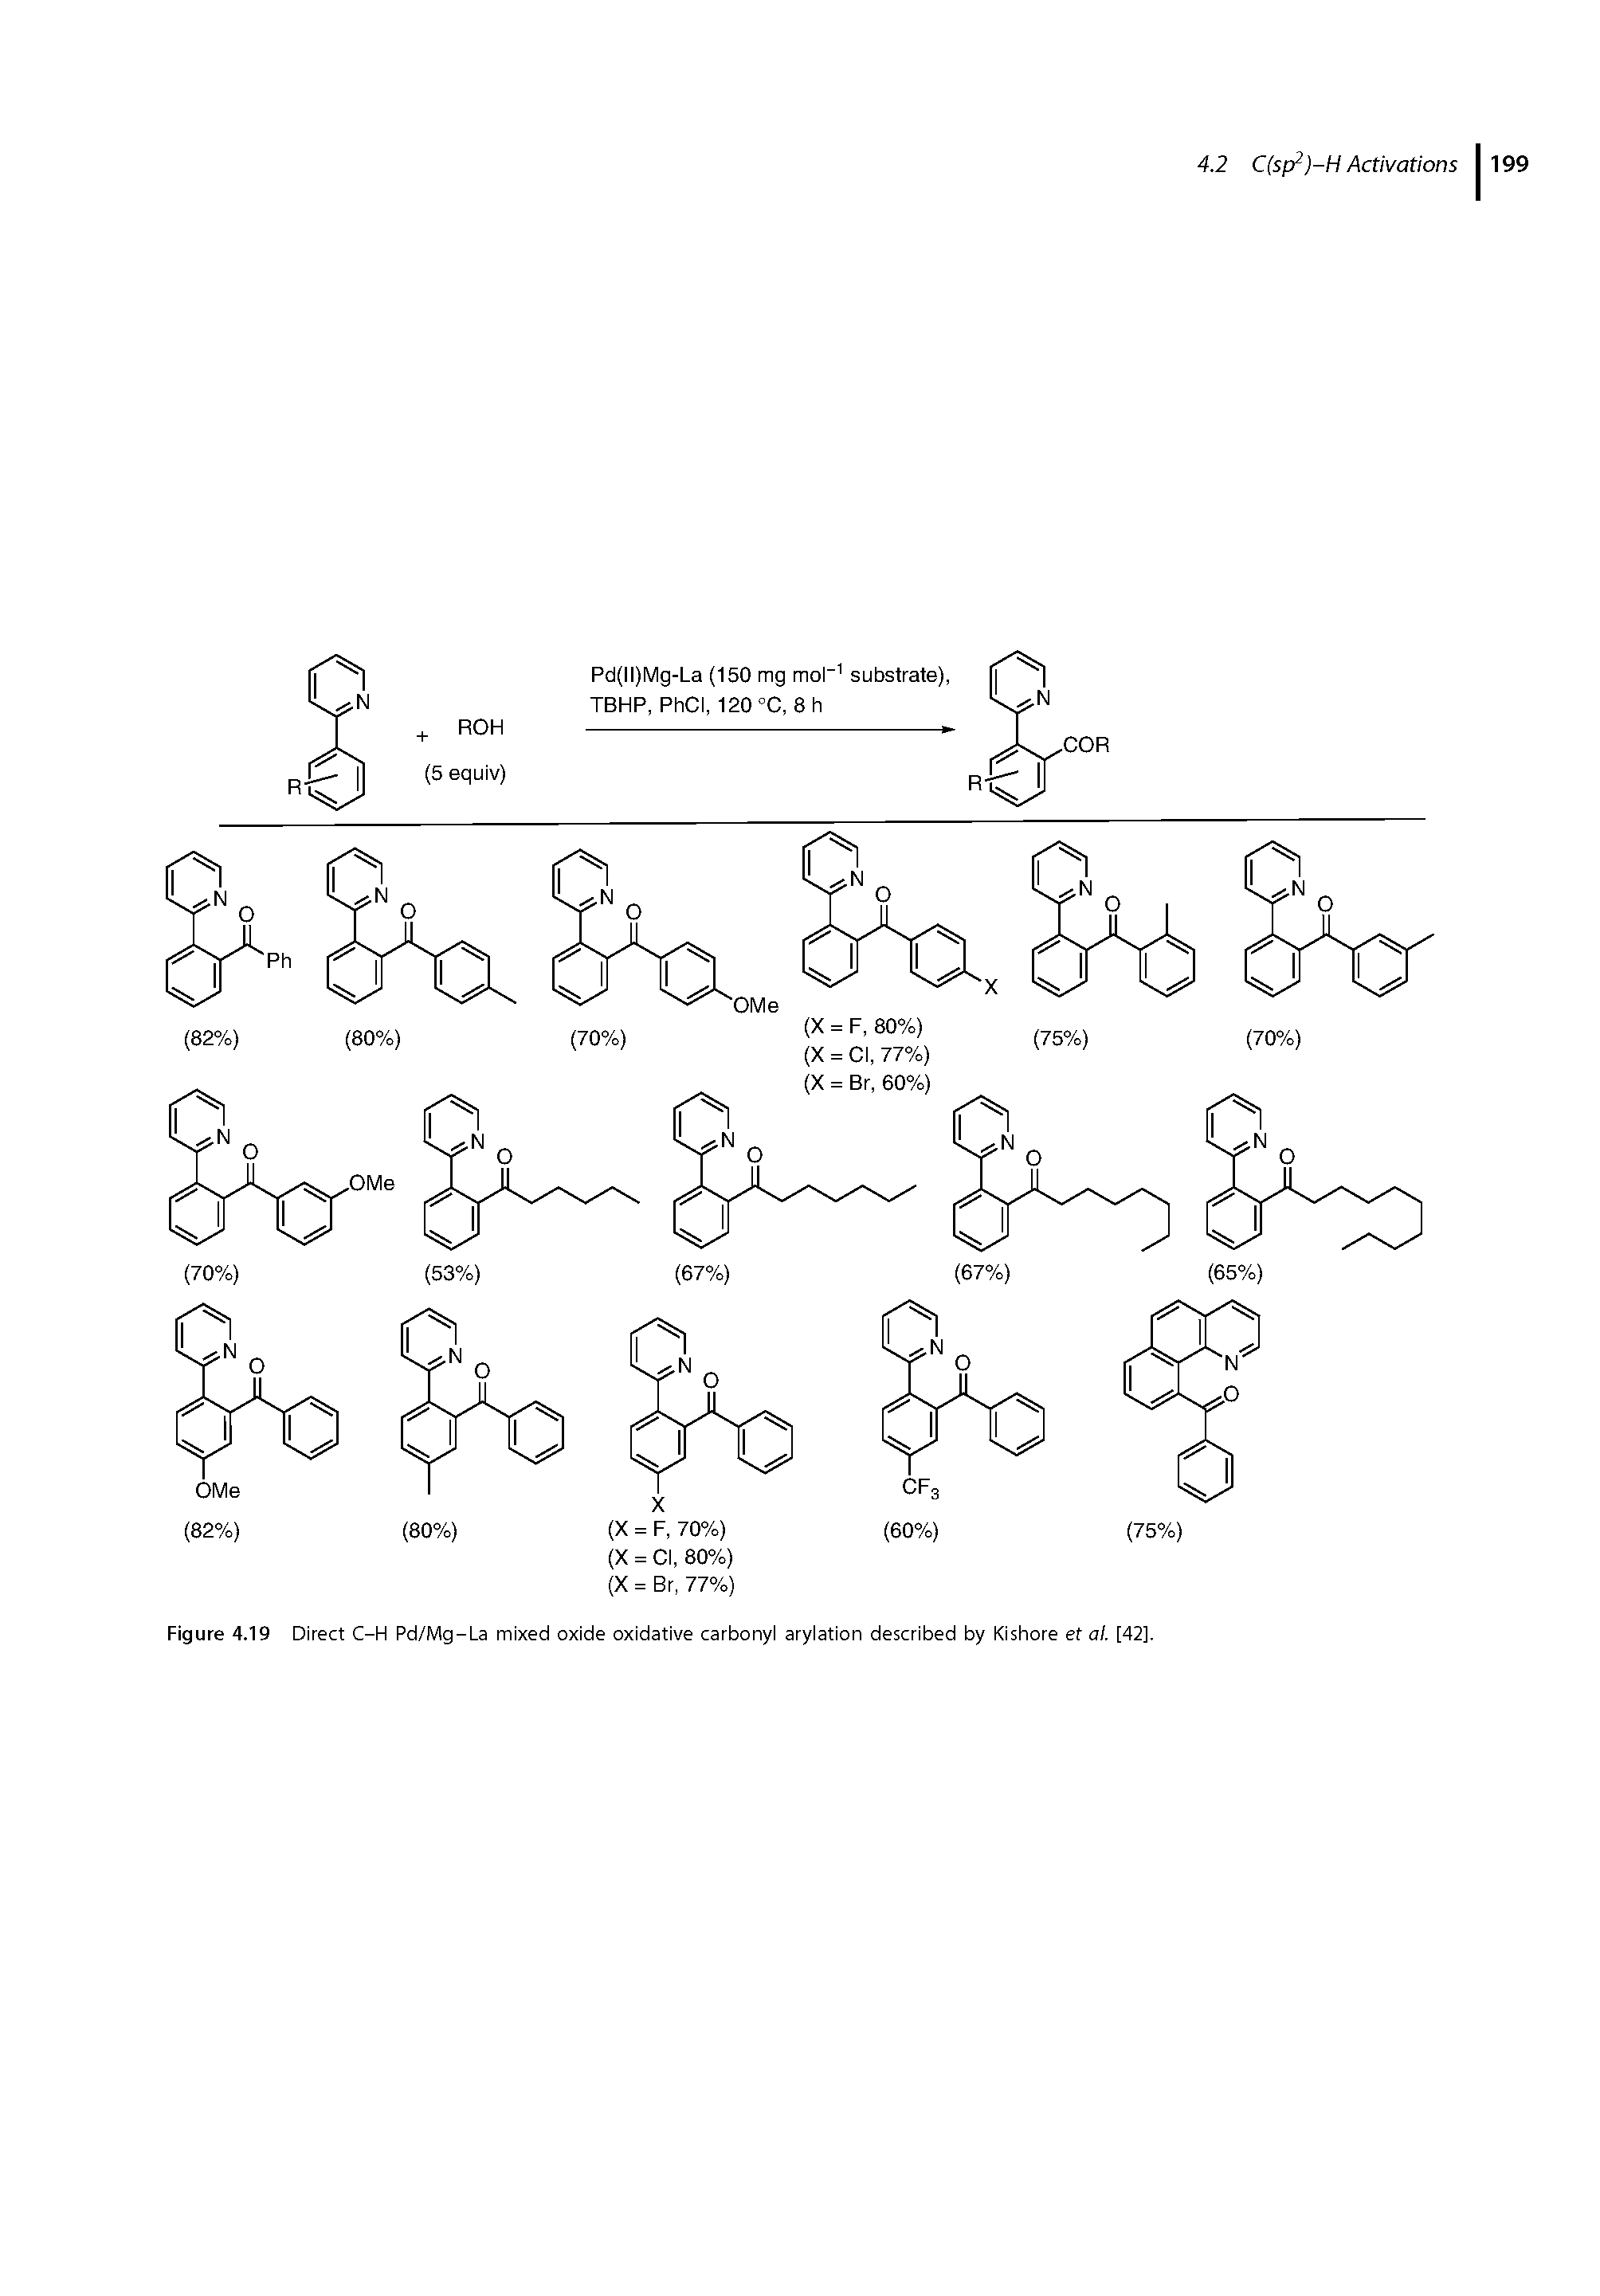 Figure 4.19 Direct C-H Pd/Mg-La mixed oxide oxidative carbonyl arylation described by Kishore et al. [42].